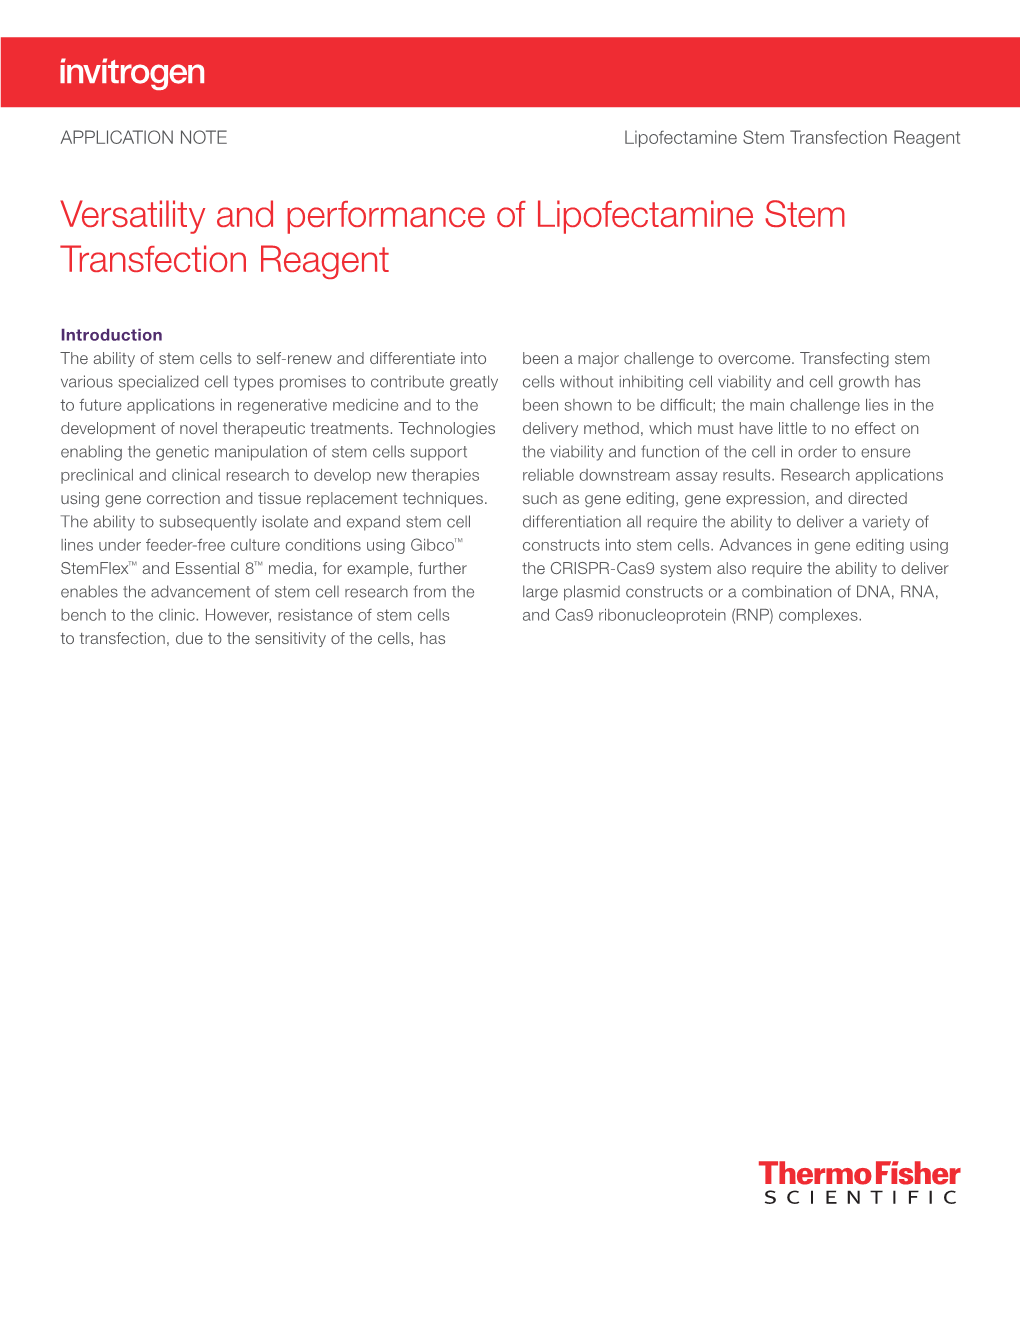 Versatility and Performance of Lipofectamine Stem Transfection Reagent